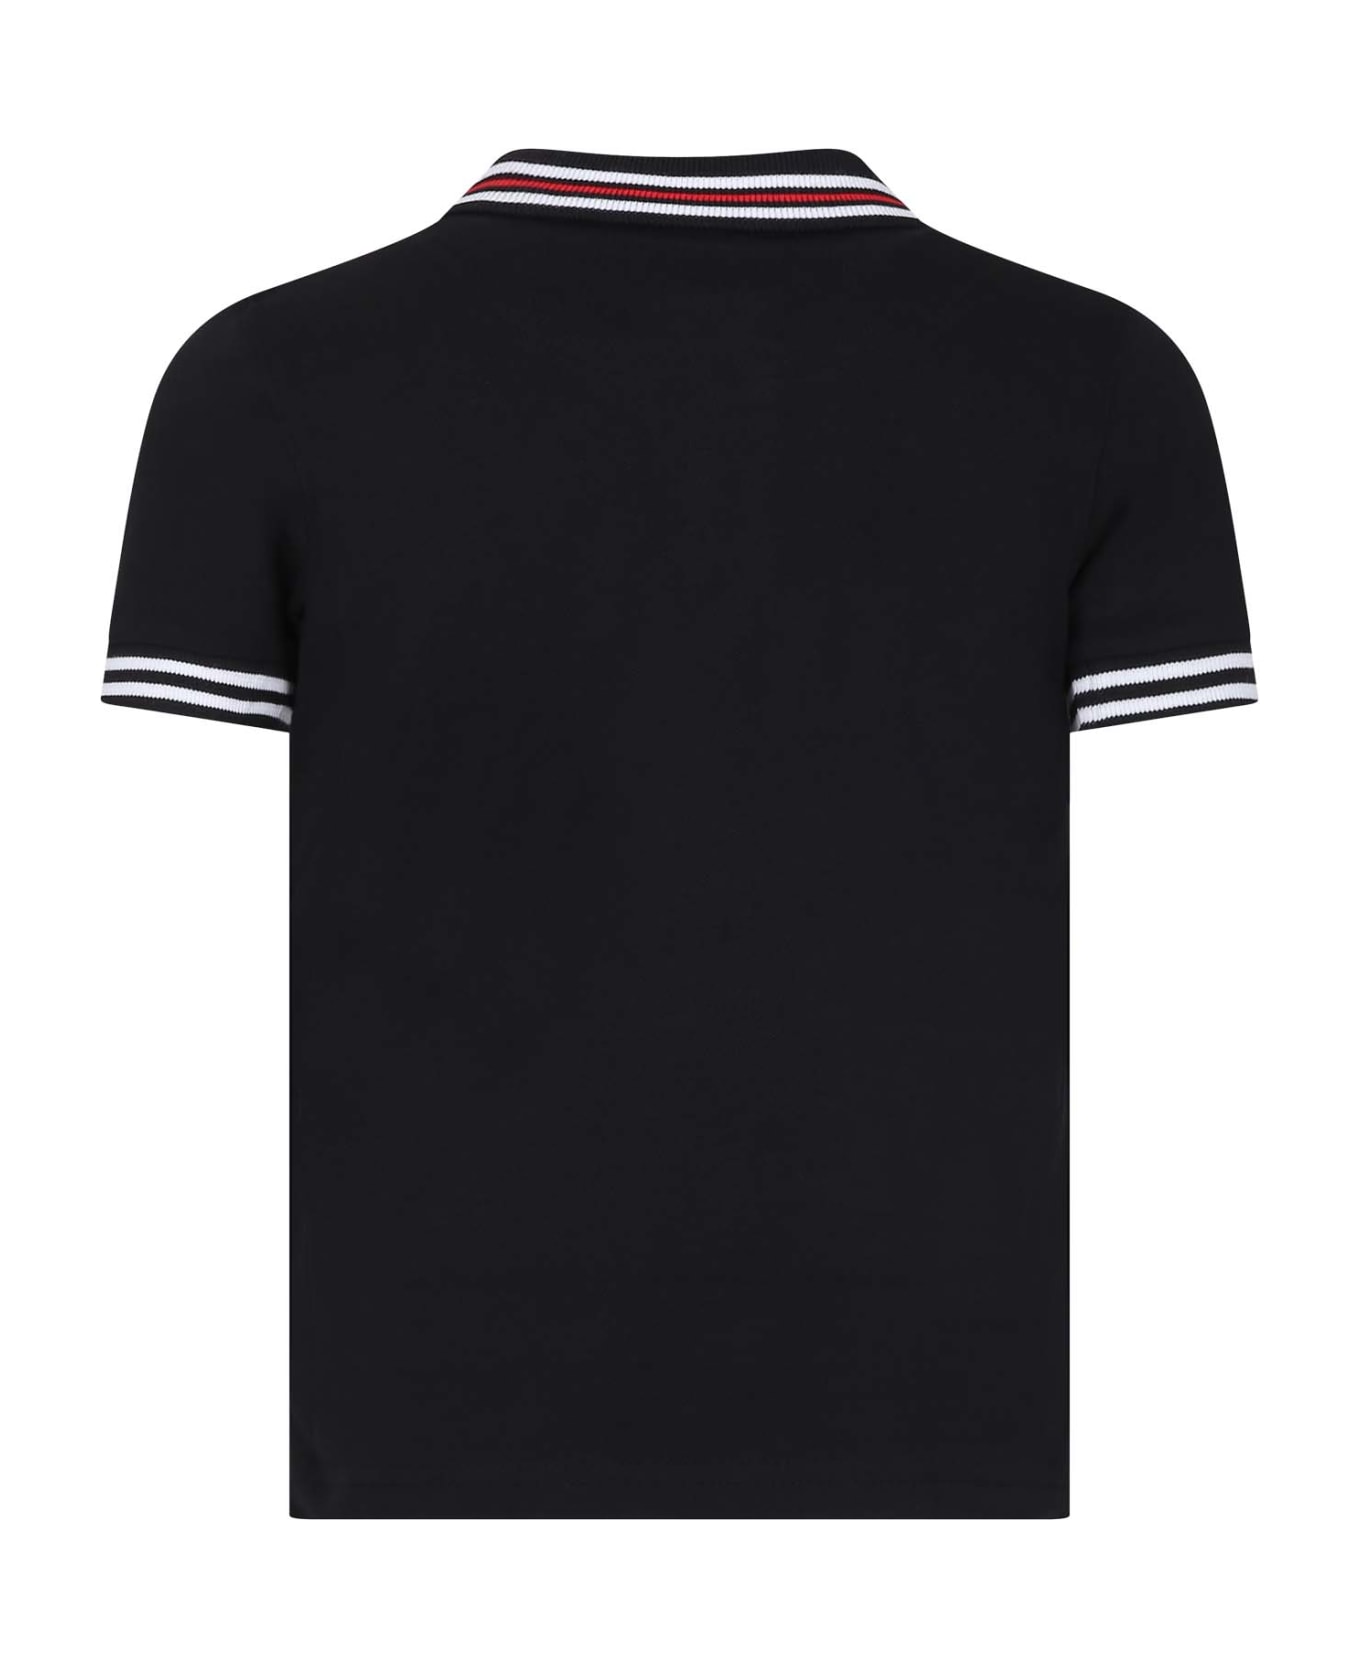 Hugo Boss Black Polo Shirt For Boy With Logo - Black